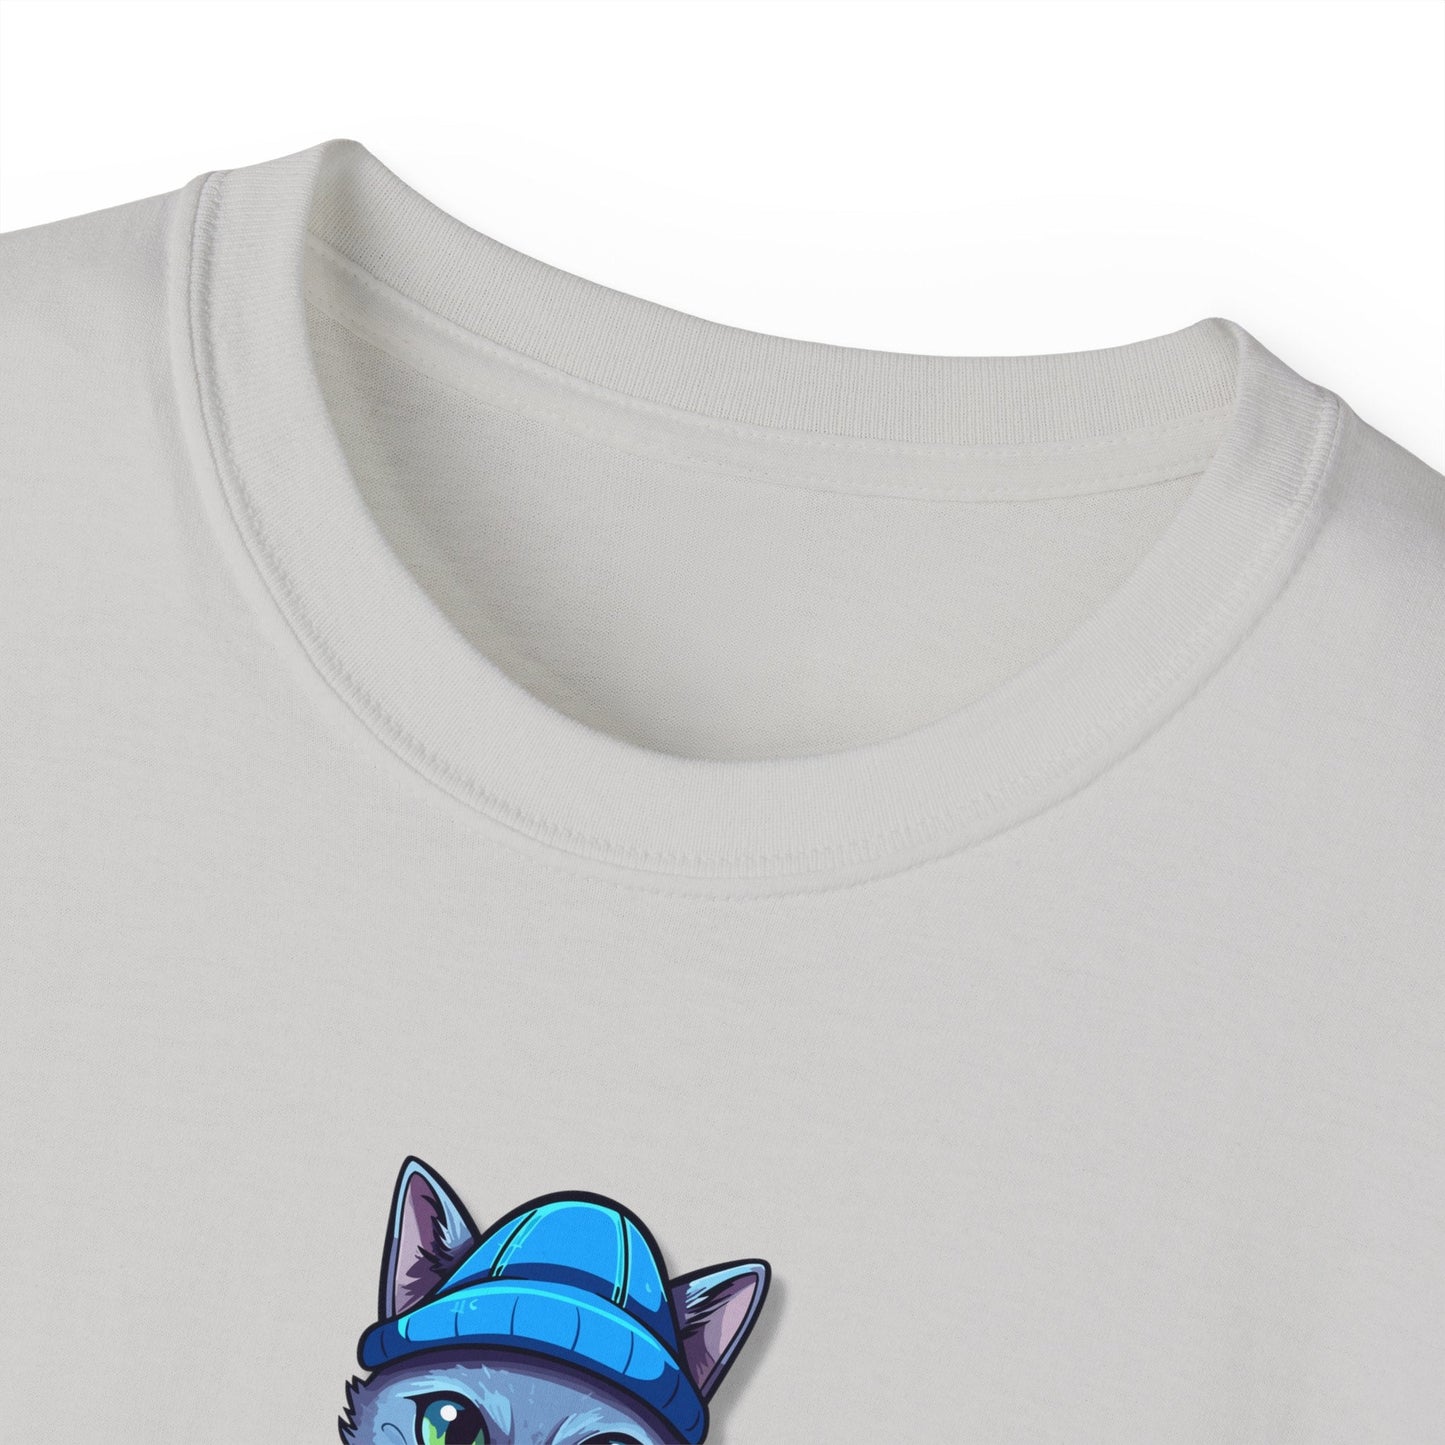 Skate Cat Unisex Ultra Cotton Tee - T - Shirt - Epileptic Al’s Shop